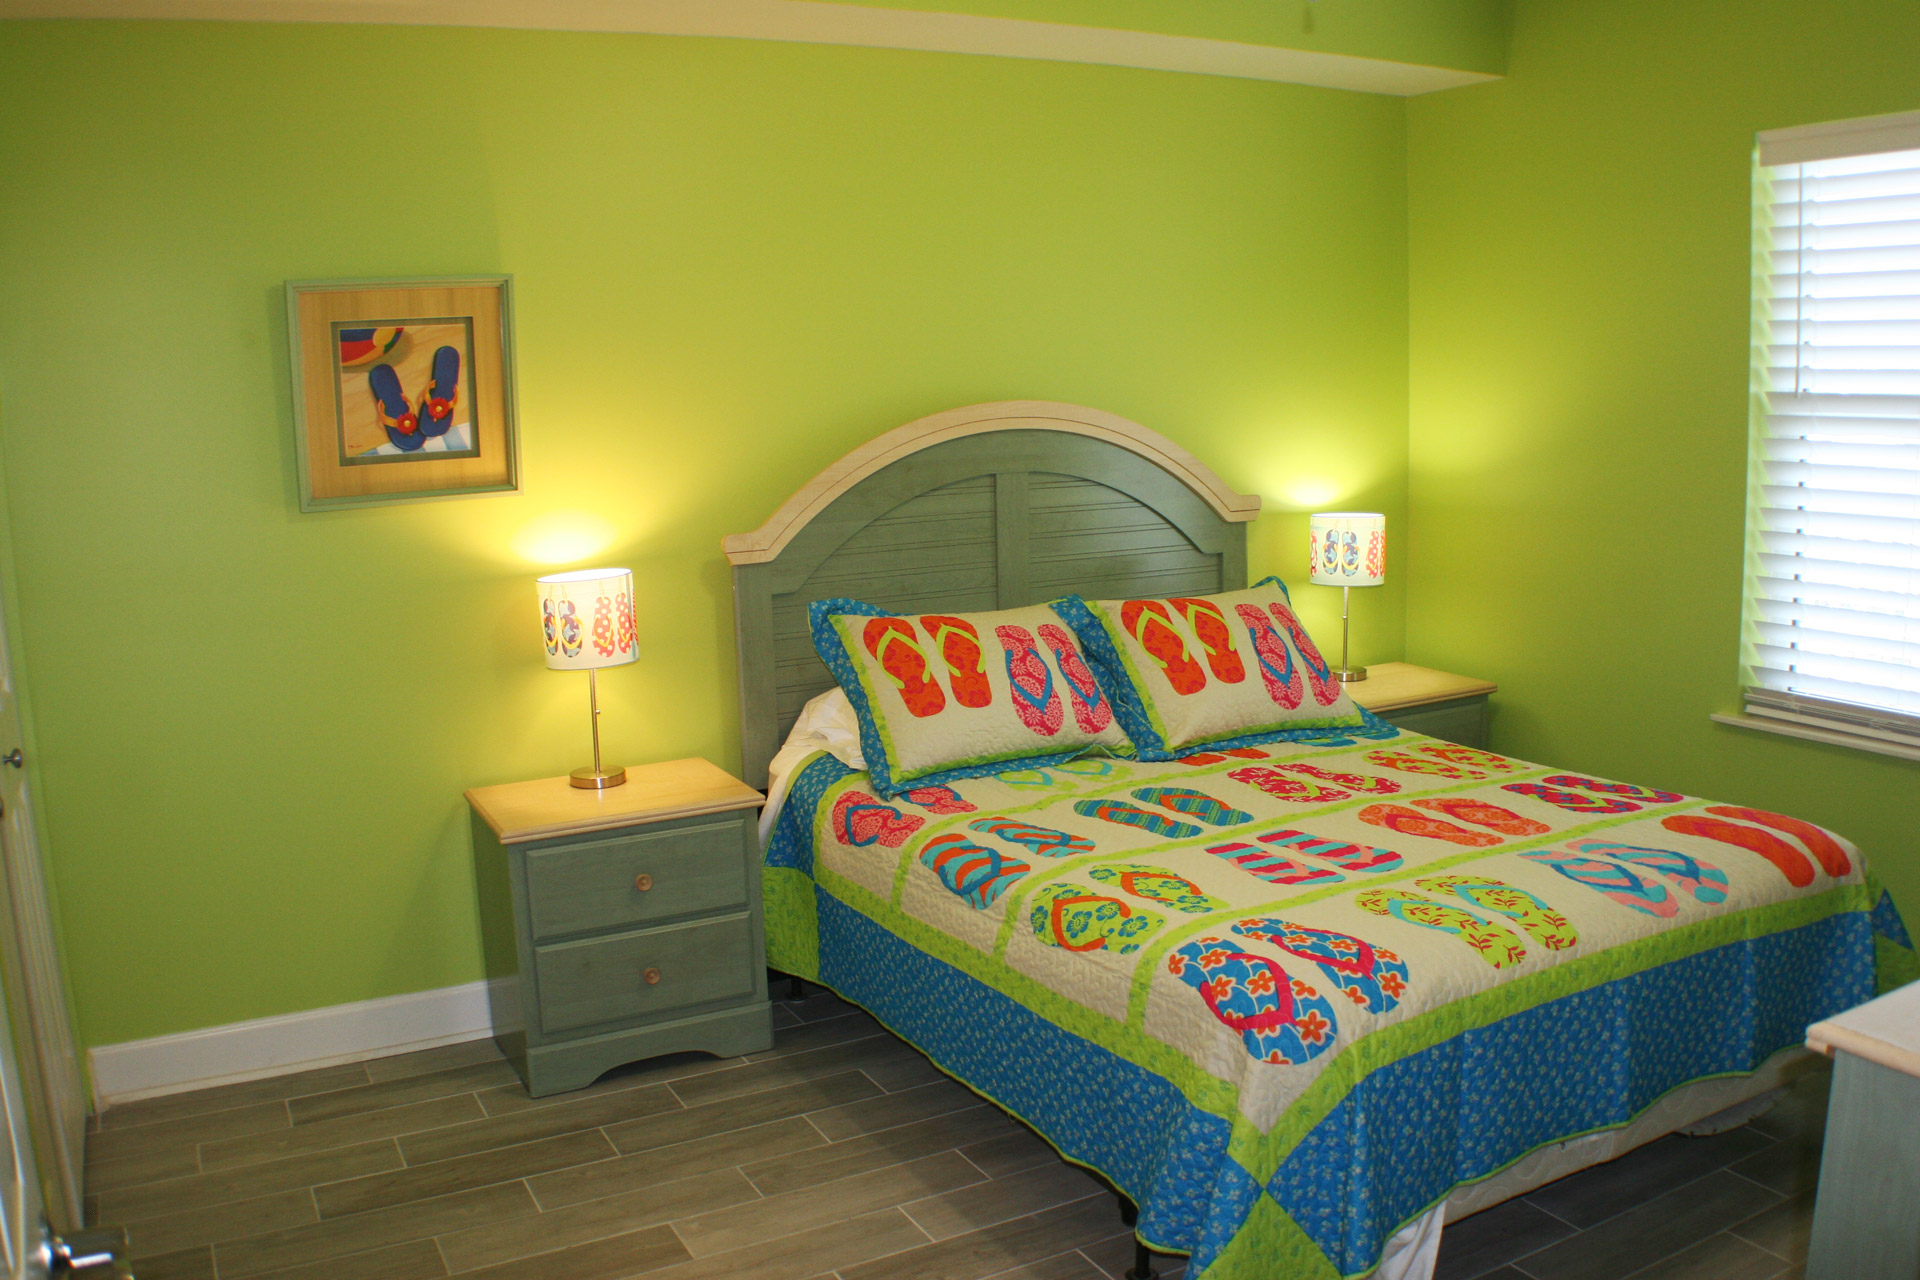 2nd Bedroom with Queen Bed and Nightstands